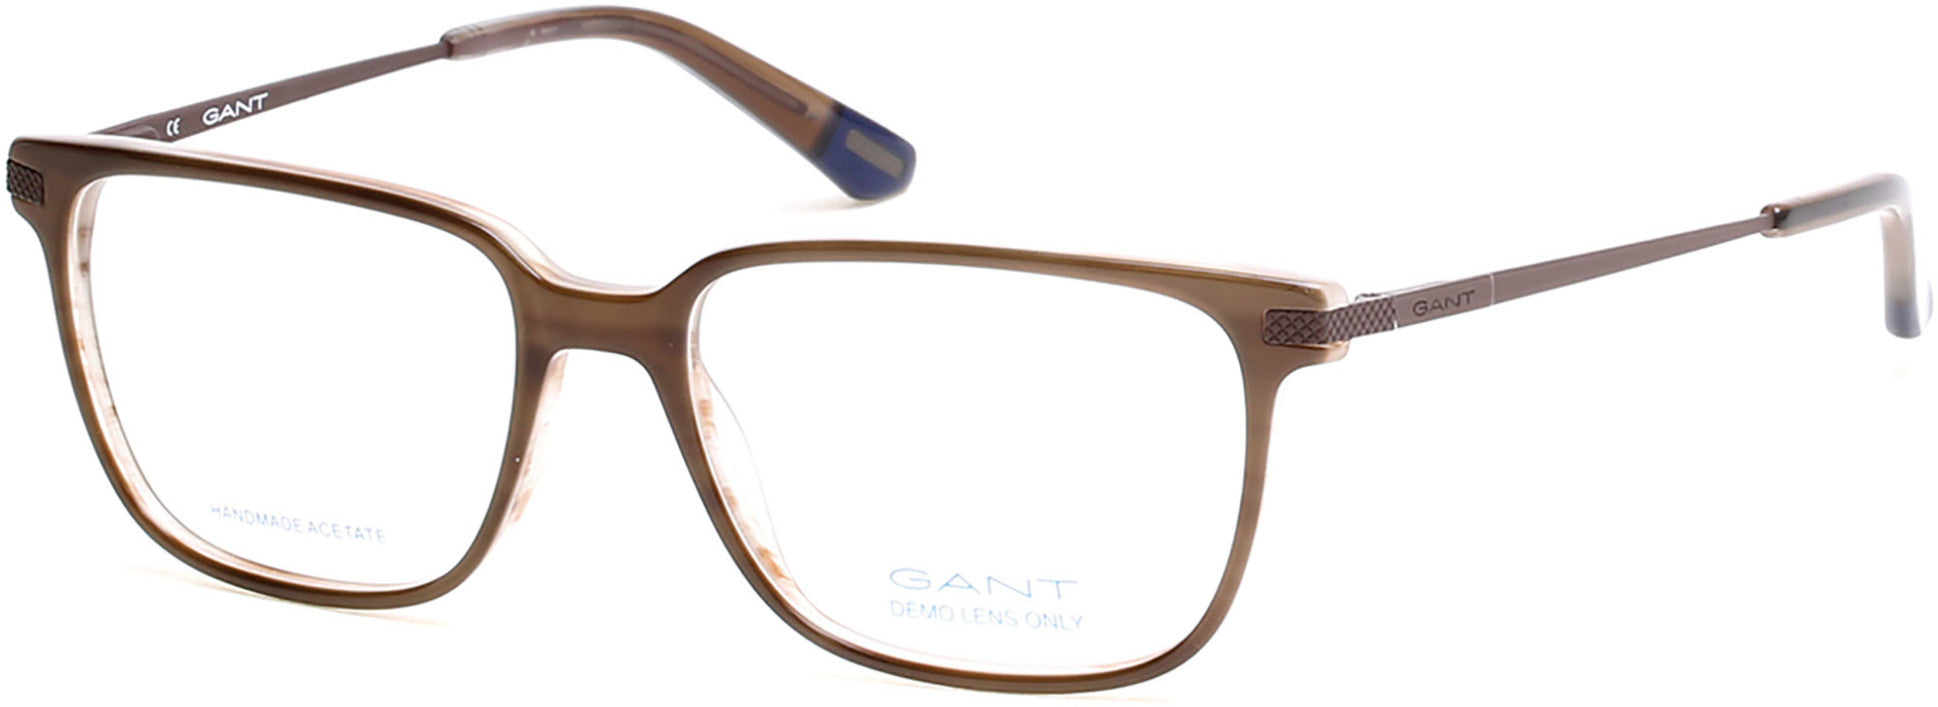 Gant GA3112 Square Eyeglasses 045-045 - Shiny Light Brown